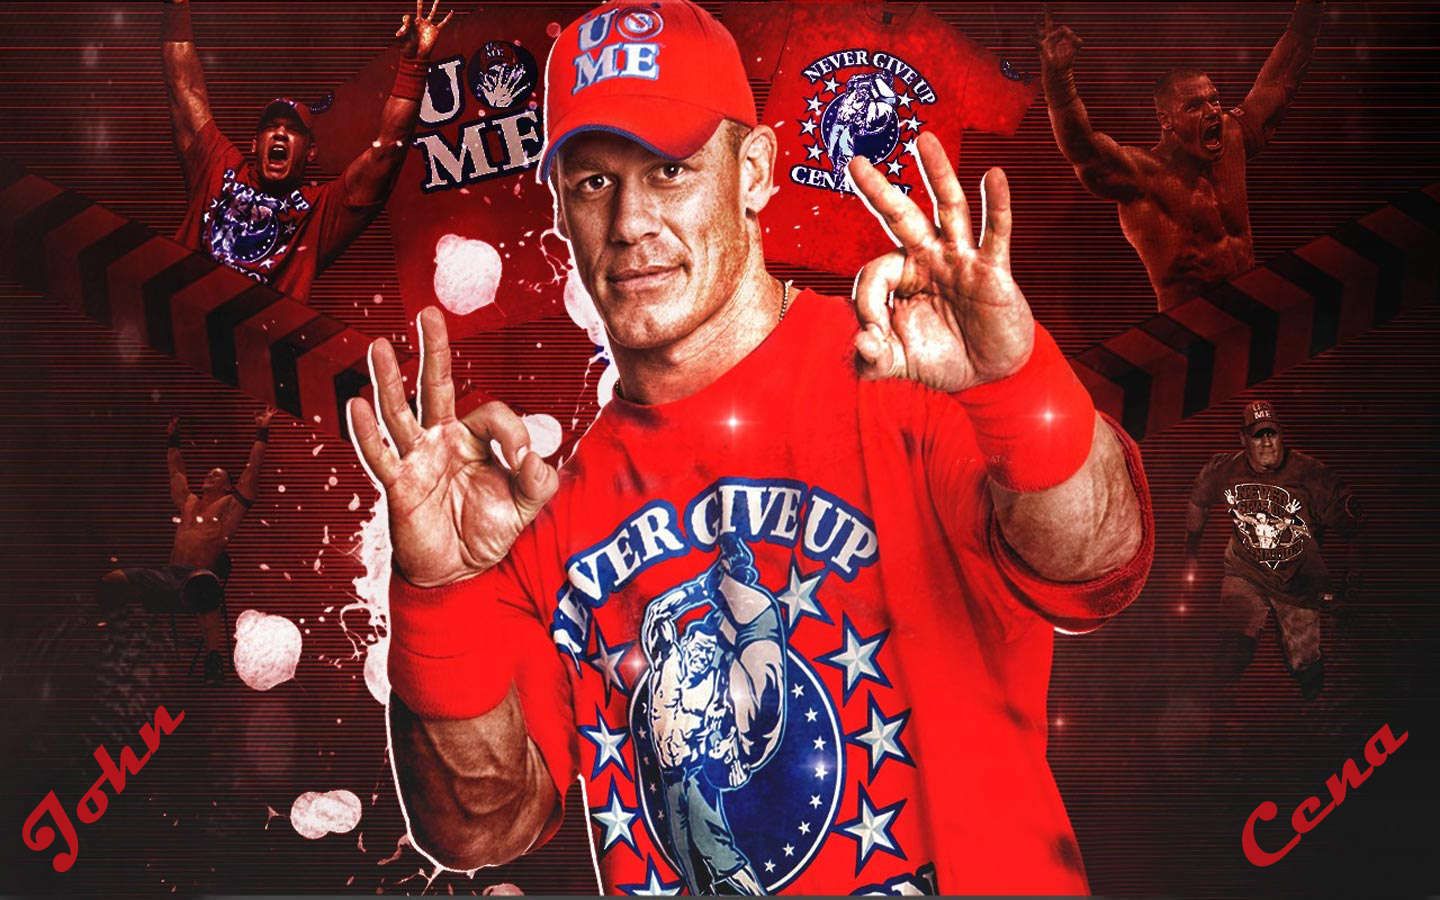 John Cena Wallpaper HD Wwe